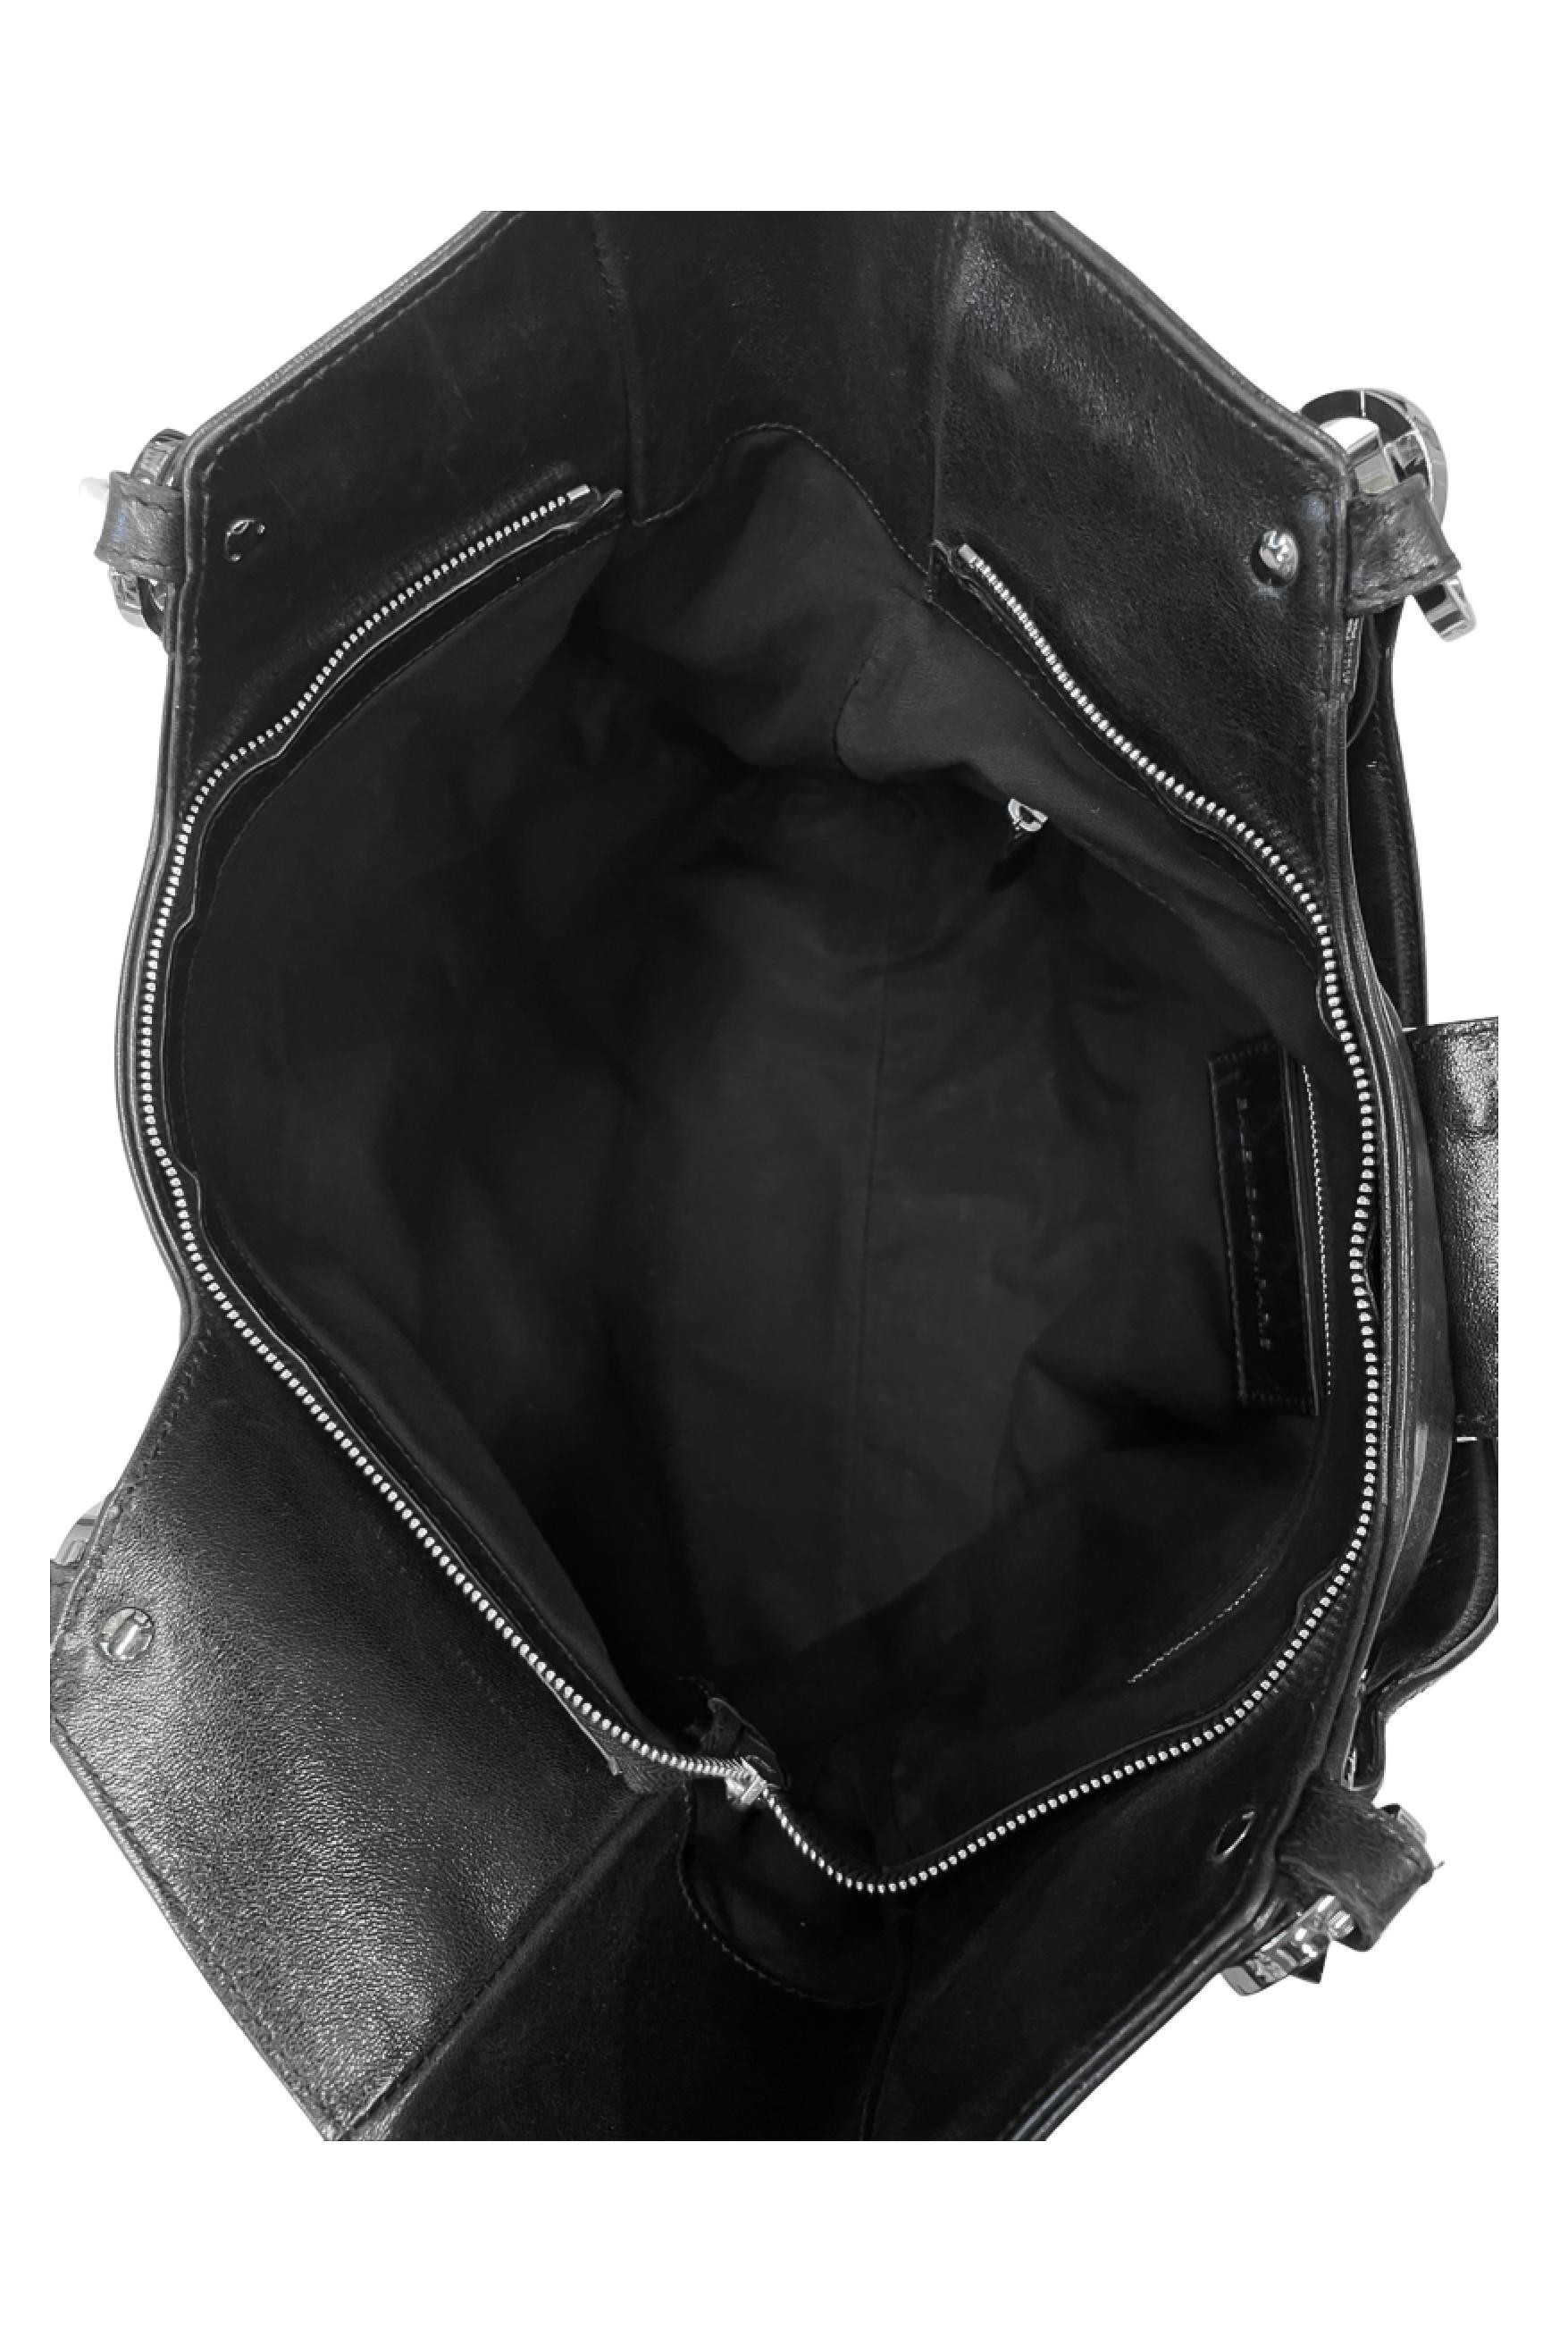 Balenciaga by Nicolas Ghesquiere Black Leather & Studded Chrome Bag 2007 For Sale 4